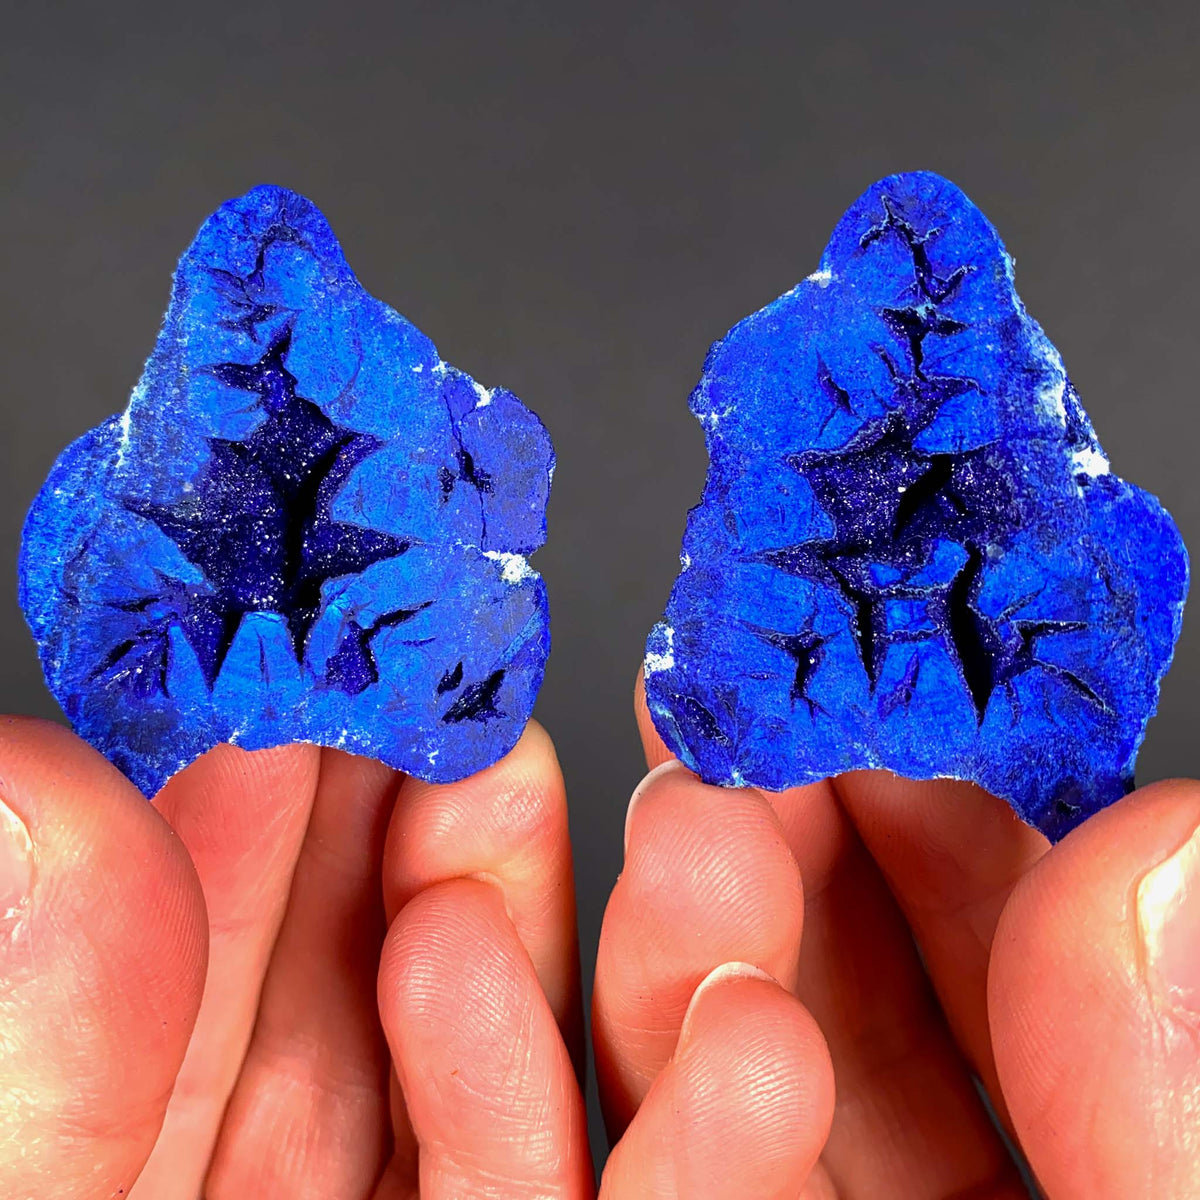 Azurite Geode with Azurite Crystals Inside